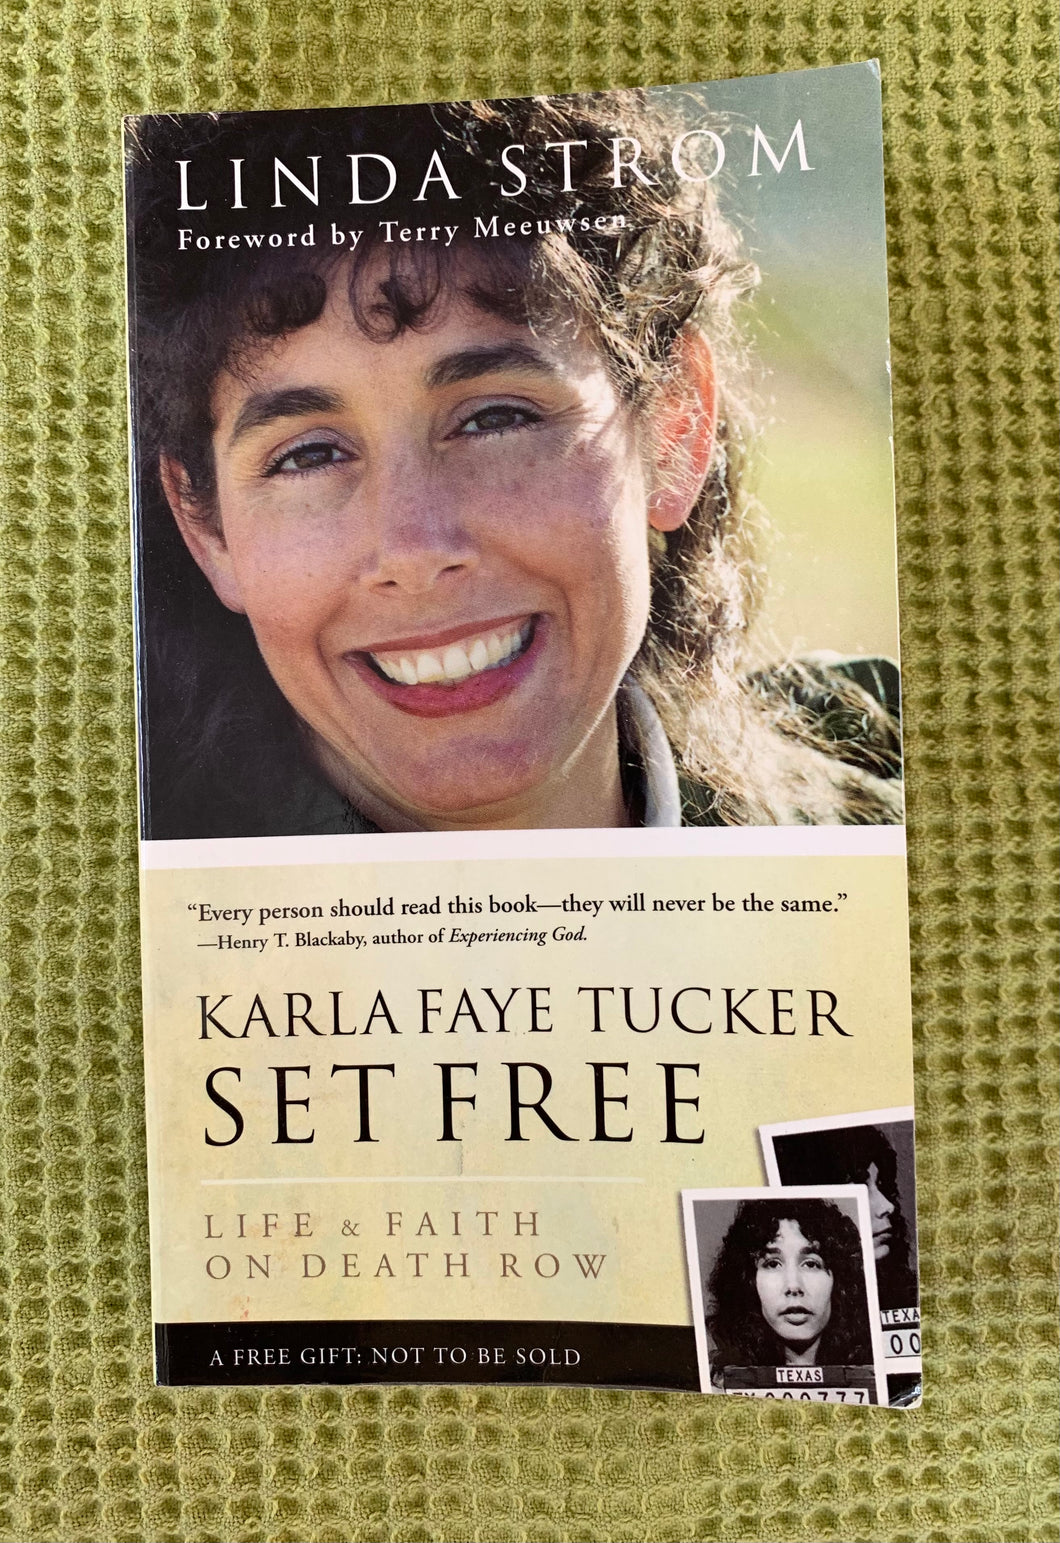 Karla Faye Tucker Set Free: Life & Faith on Death Row